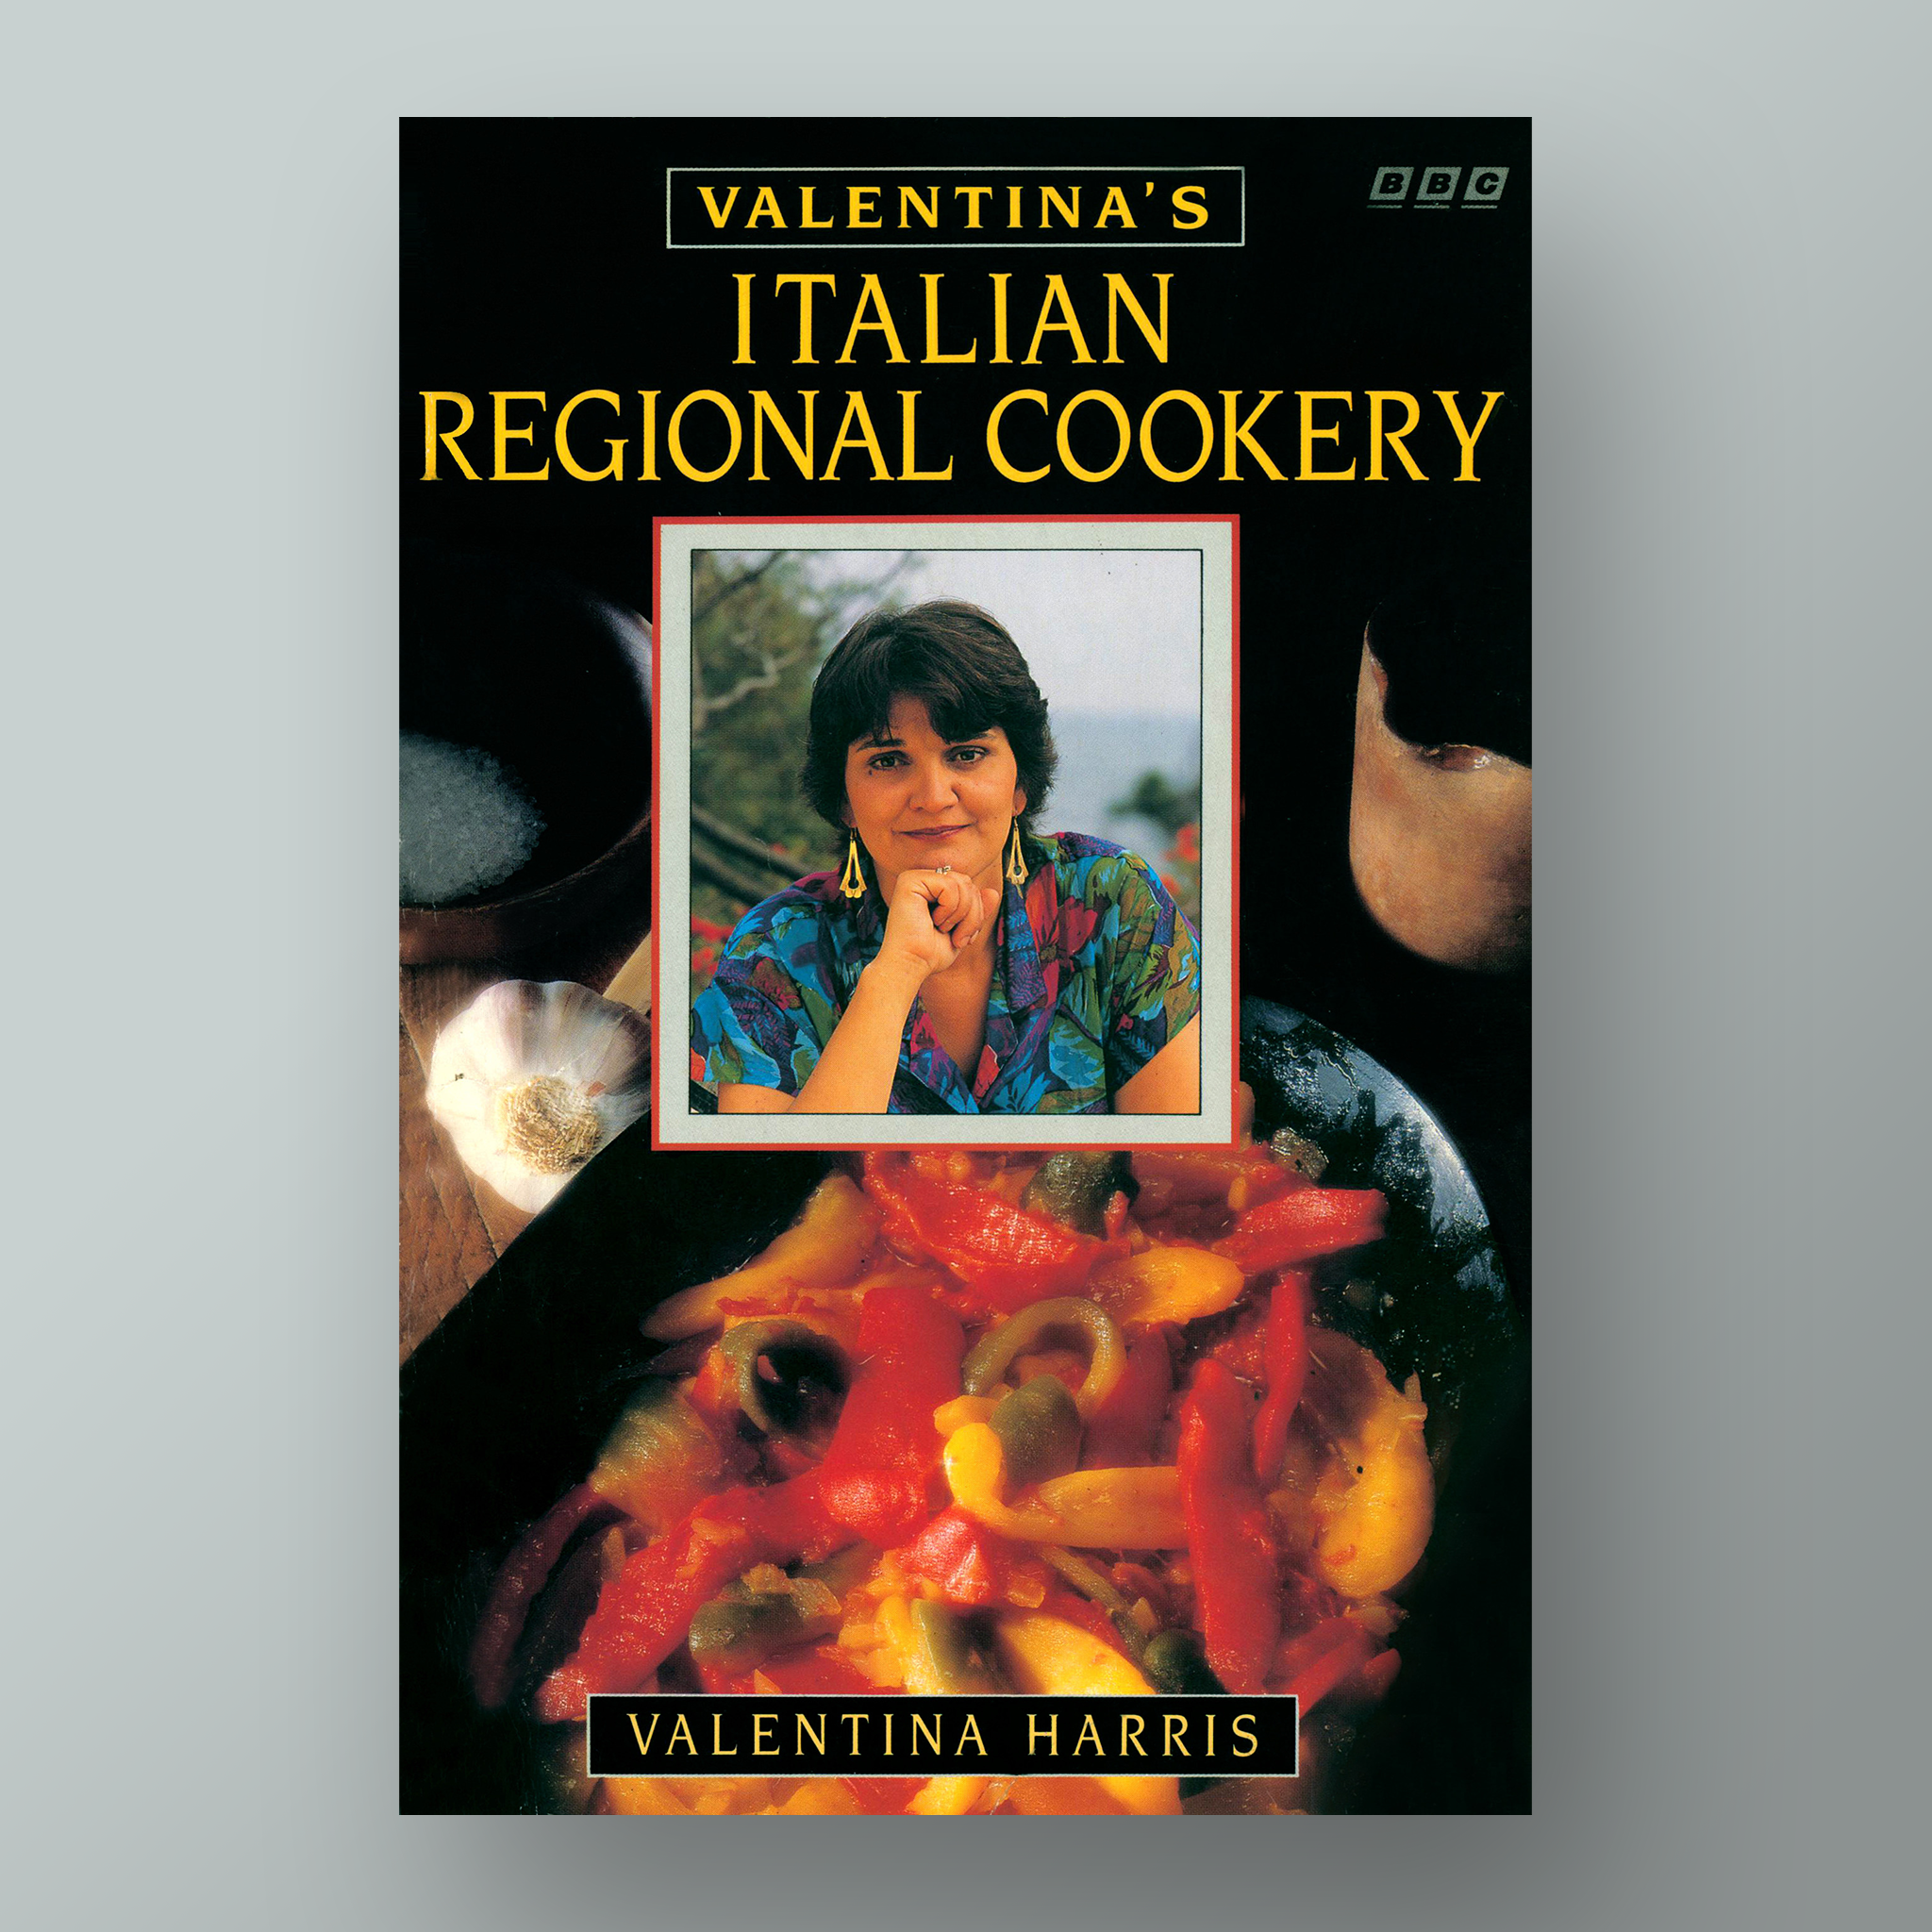 Valentina’s Italian Regional Cookery cookbook cover